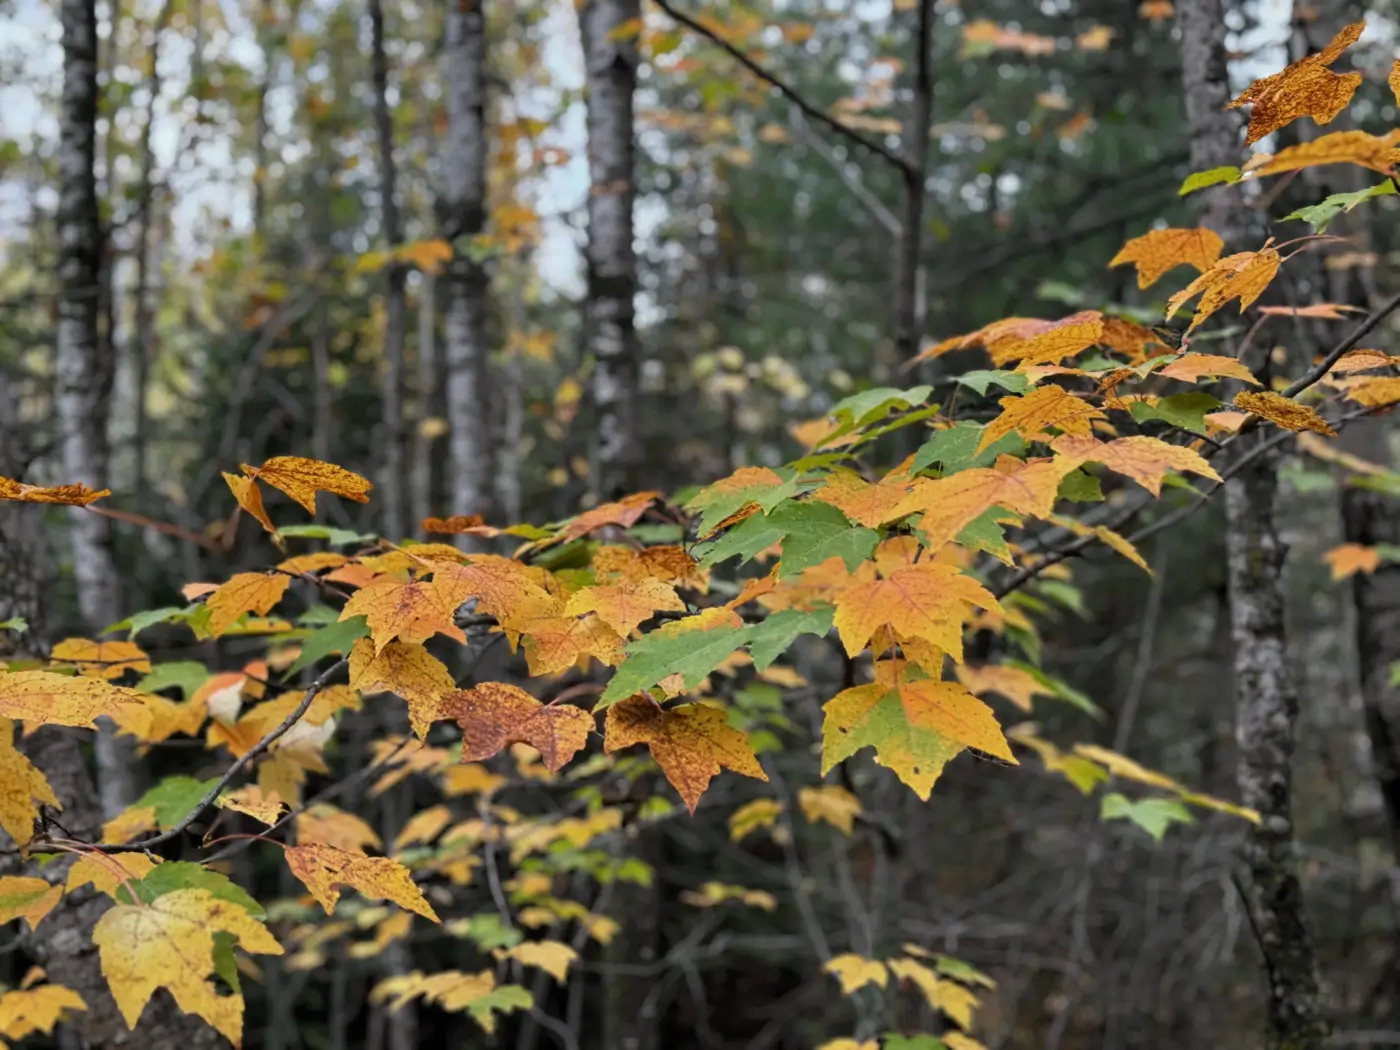 Photo of intermingled orange and green maple leaves